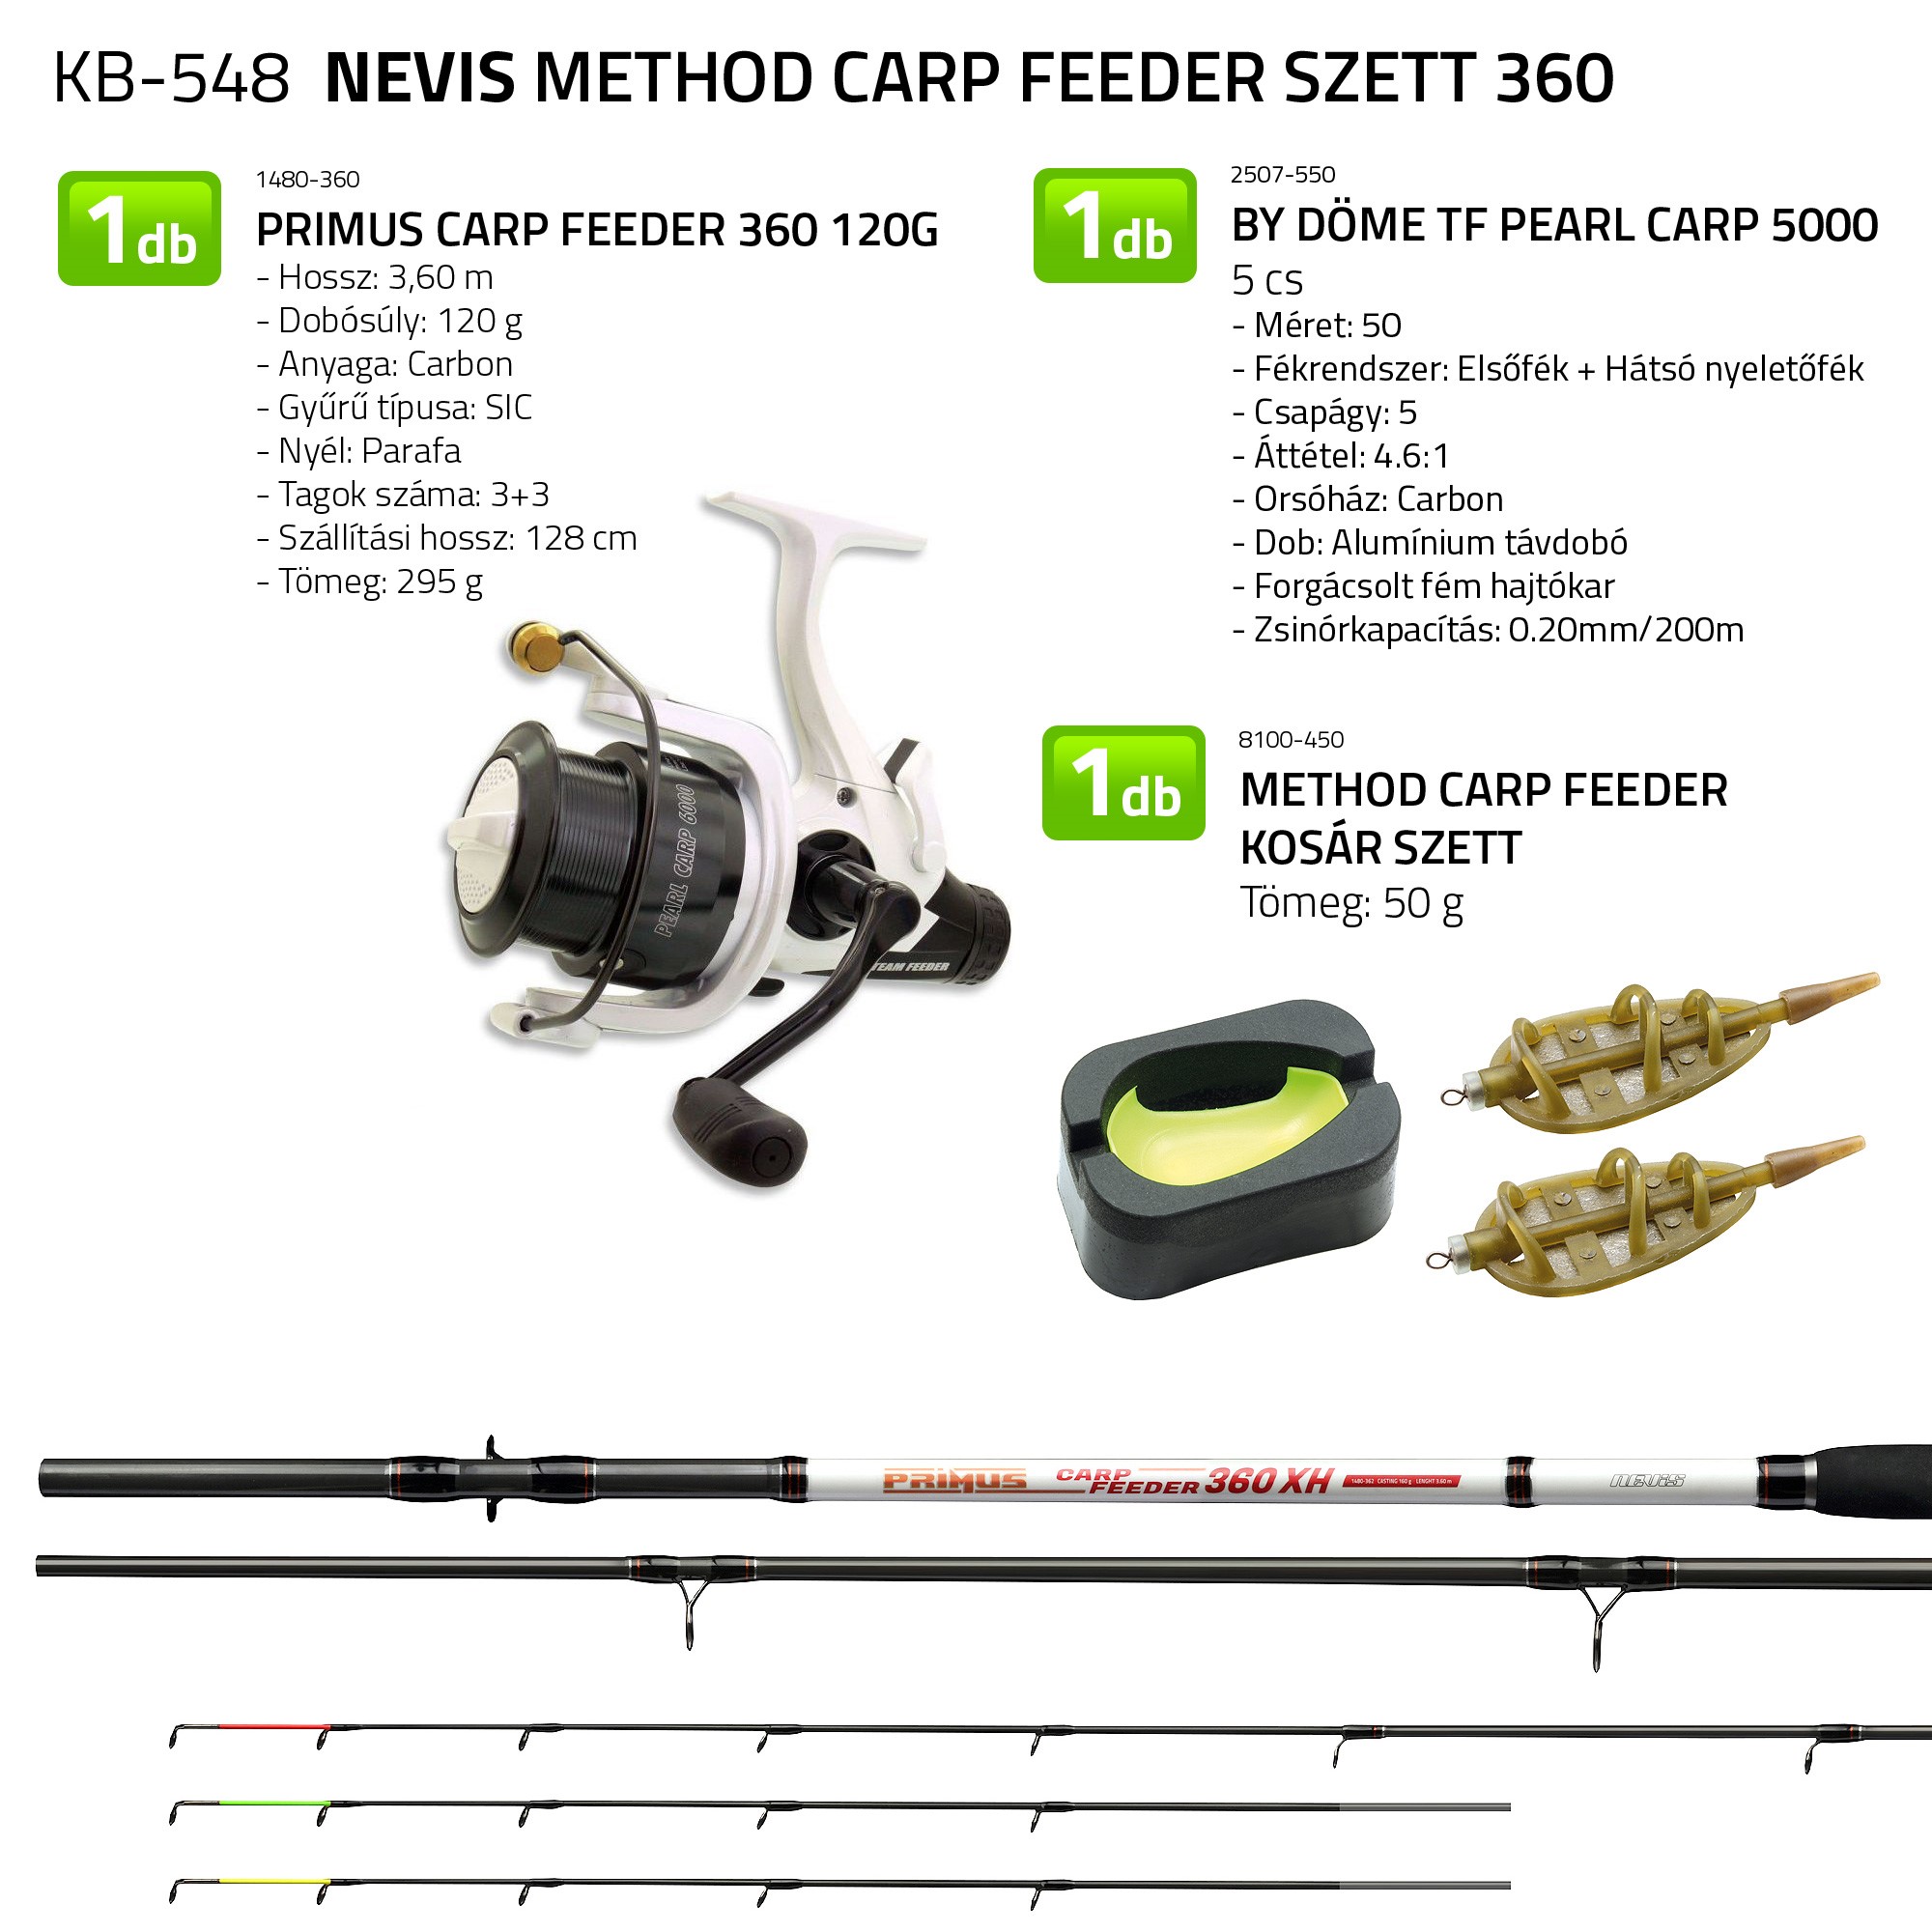 NEVIS Method Carp feeder szett 360